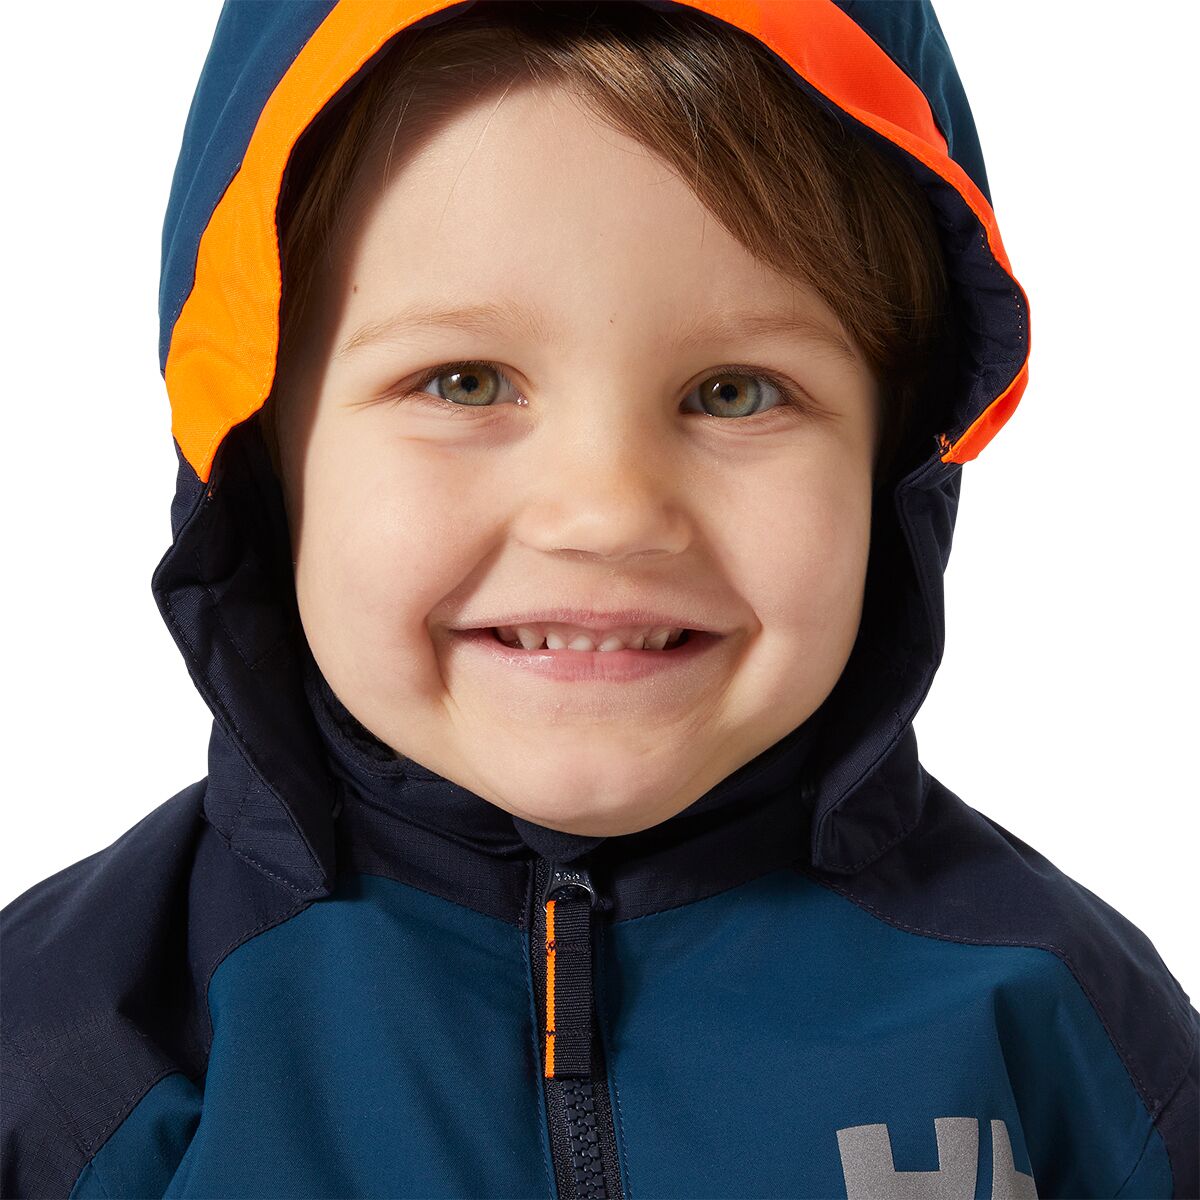 Helly Hansen Legend 2.0 Insulated Jacket - Toddlers' - Kids